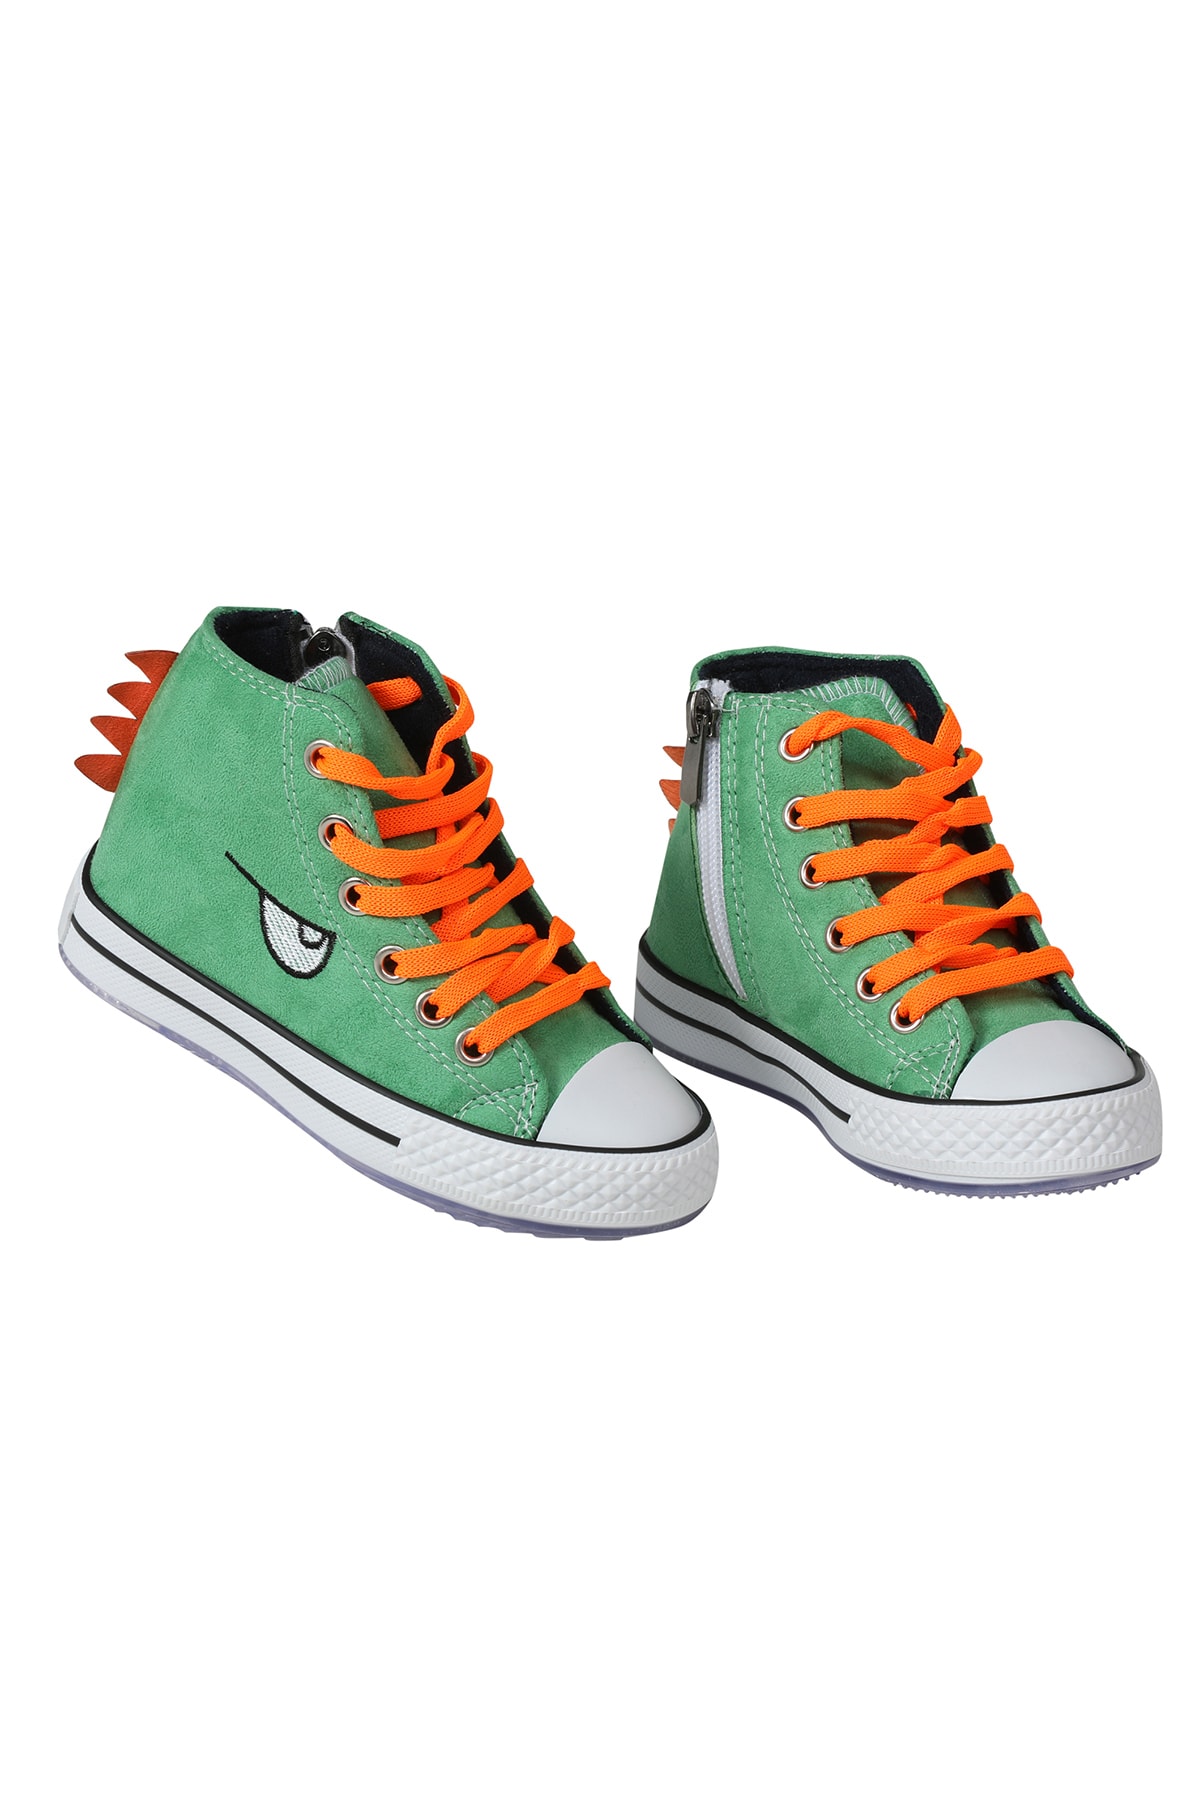 LupiaKids Yeşil - Green Monster Erkek Çocuk Sneakers